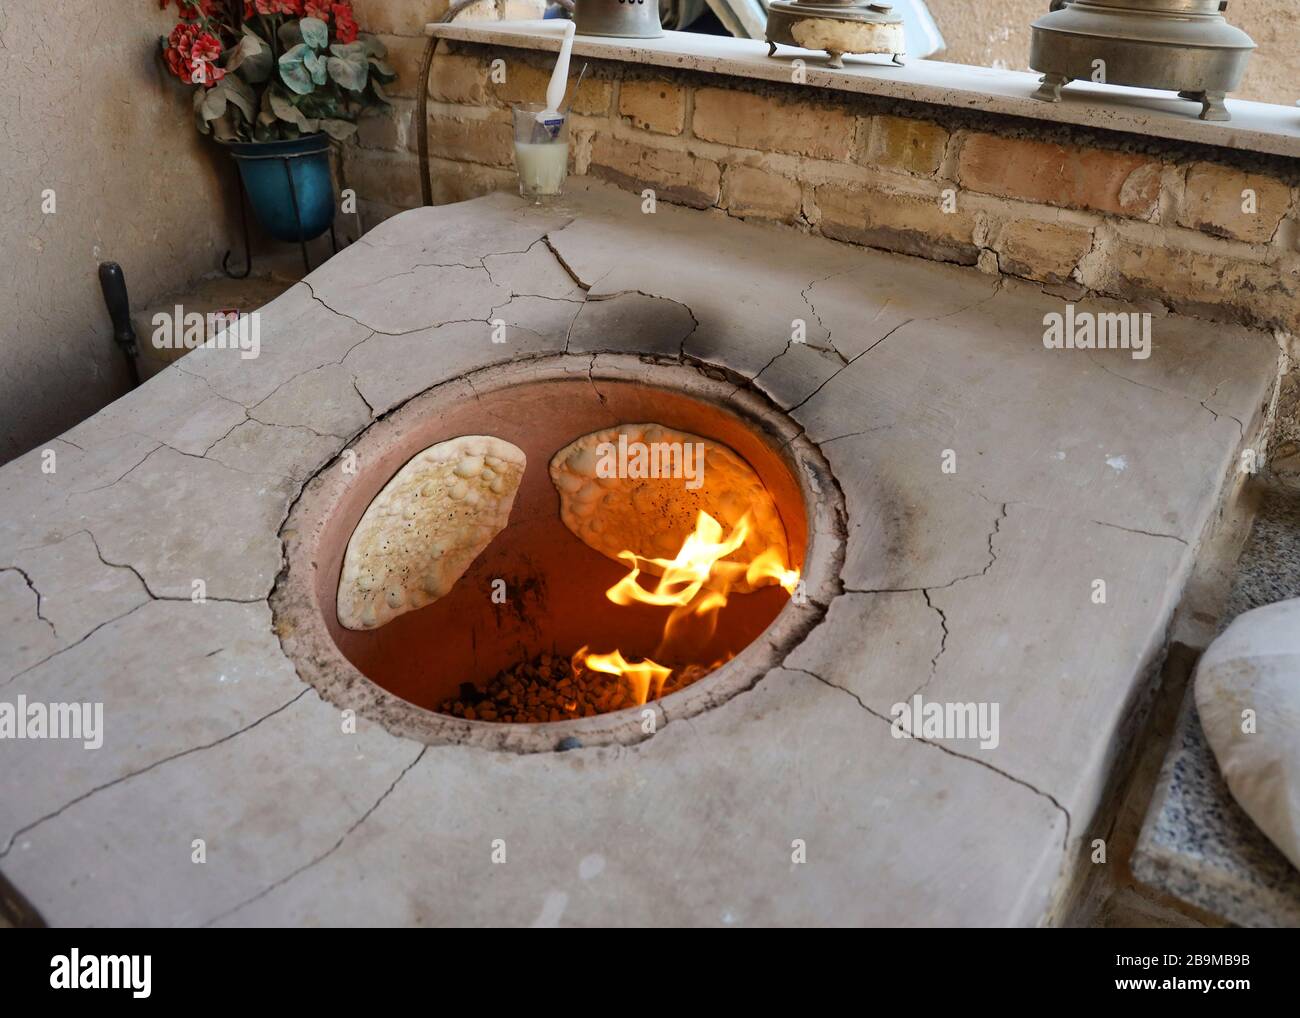 Brotbacken im traditionellen Tandoor Ofen im Khaneye Amoo Mash Reza Haus (Haus des Onkels Mesh Reza) im Dorf Kavirabad, Varamin, Teheran Stockfoto